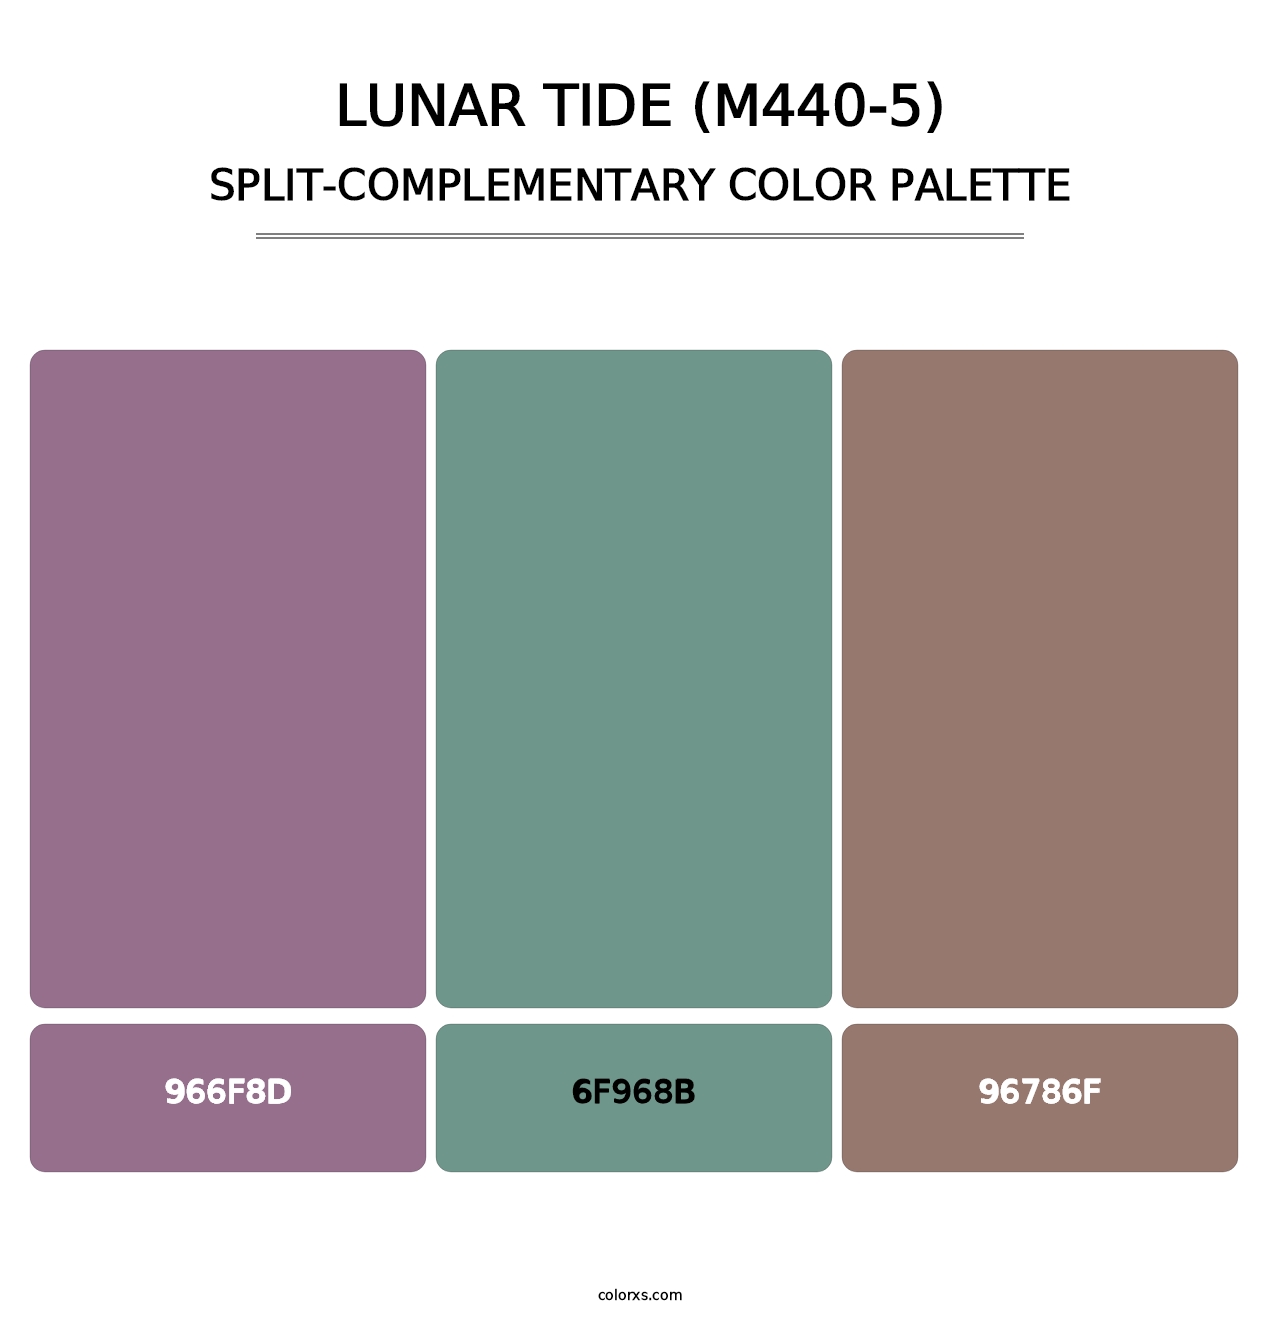 Lunar Tide (M440-5) - Split-Complementary Color Palette